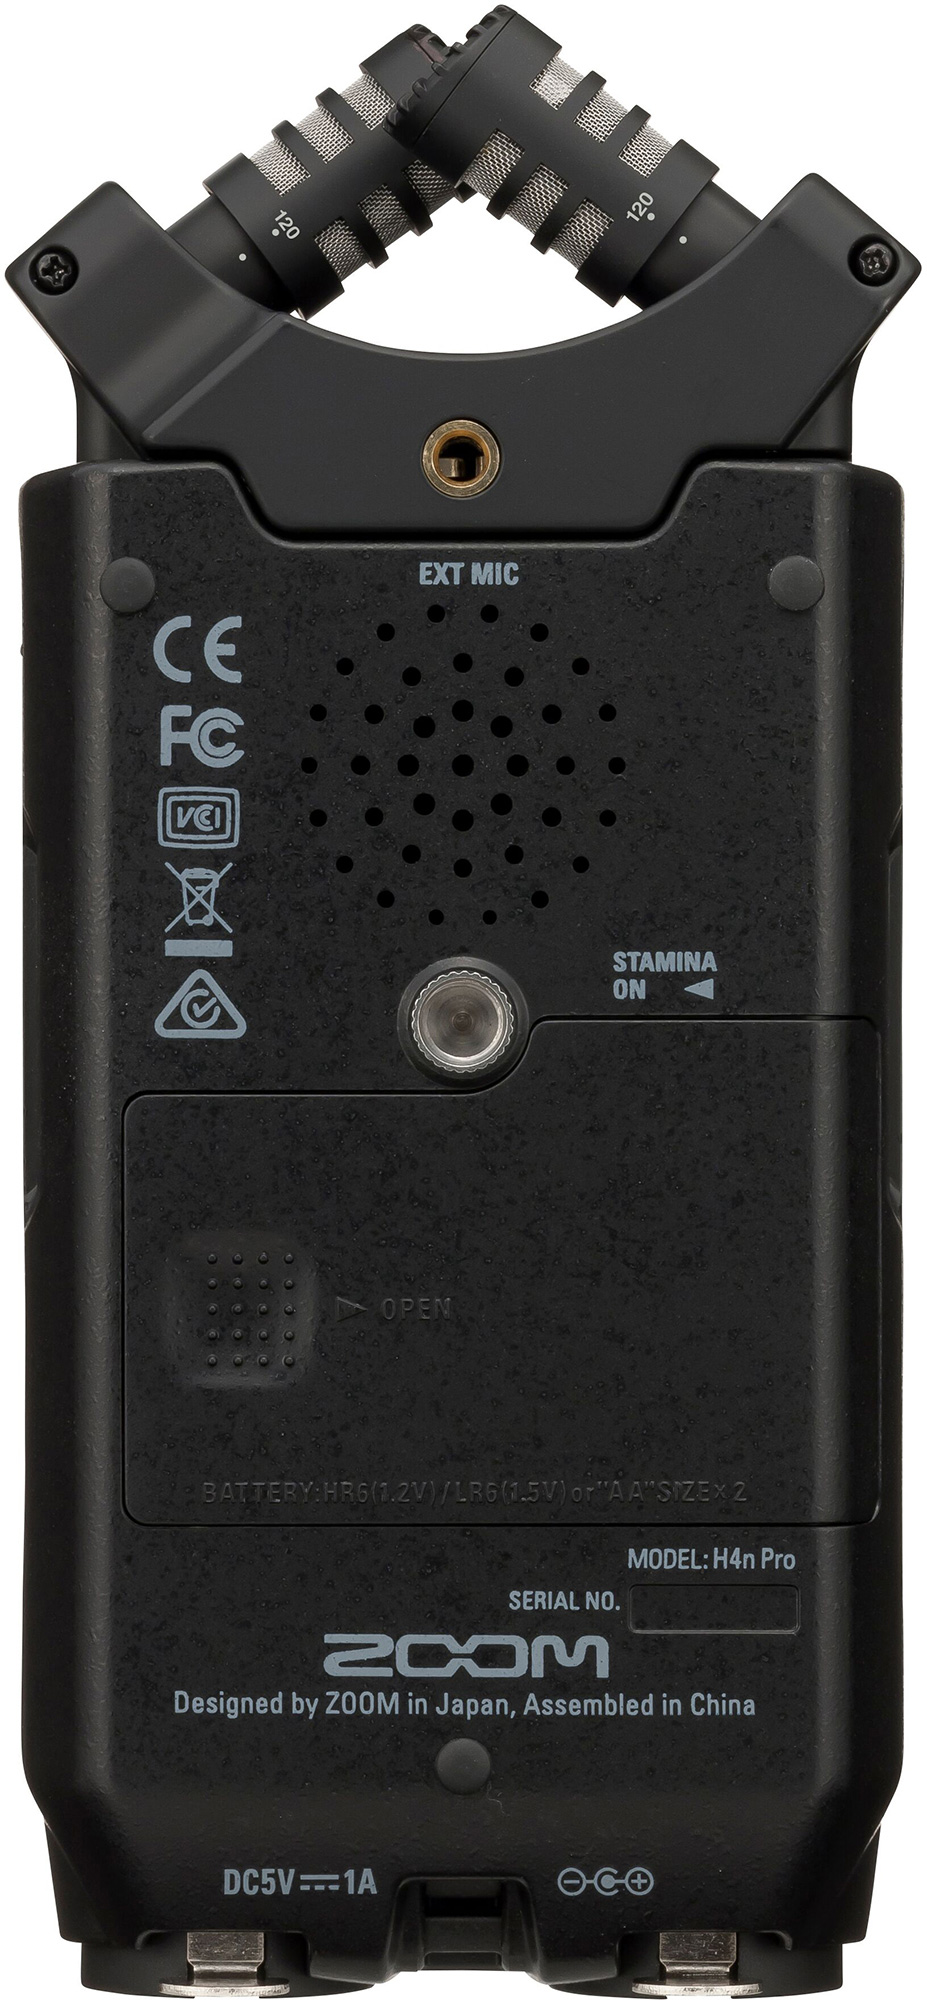 ZOOM H4n PRO 4-Track Handheld Digital Audio Recorder - All Black